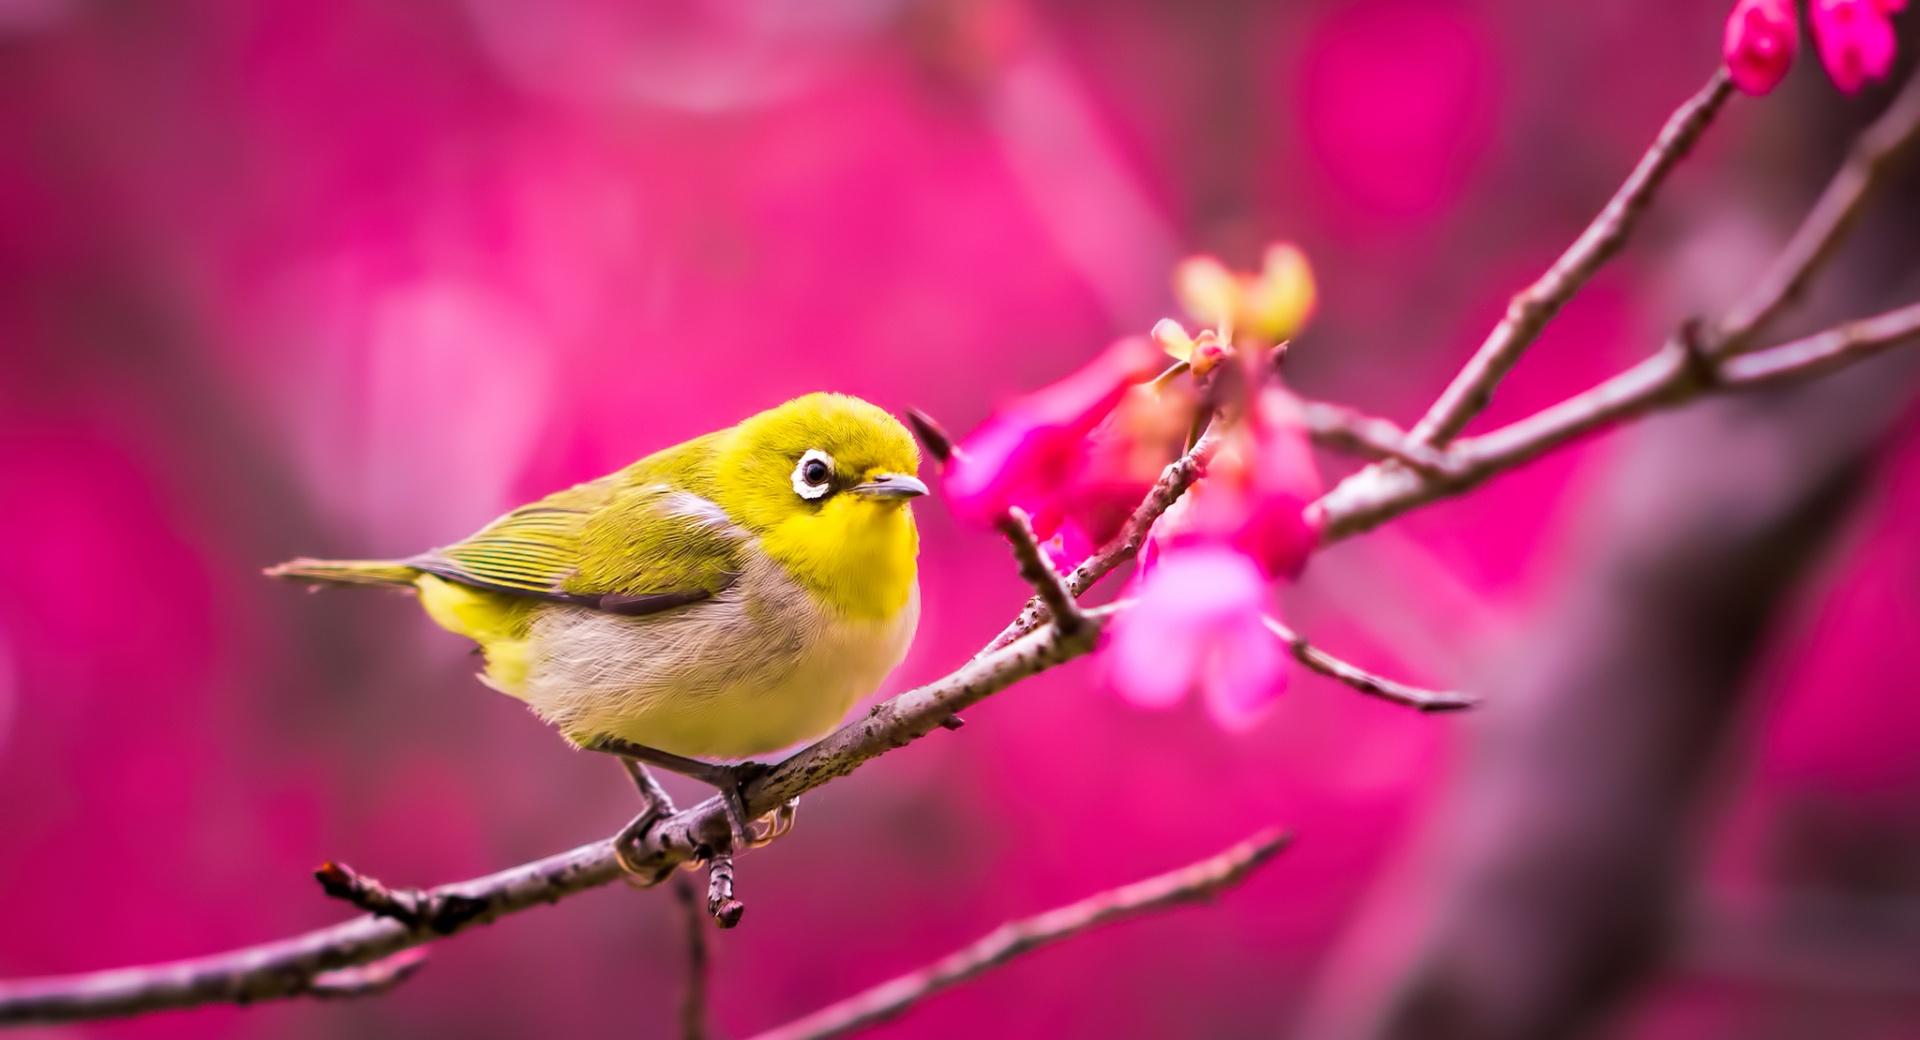 Yellow Bird Springtime at 1024 x 1024 iPad size wallpapers HD quality